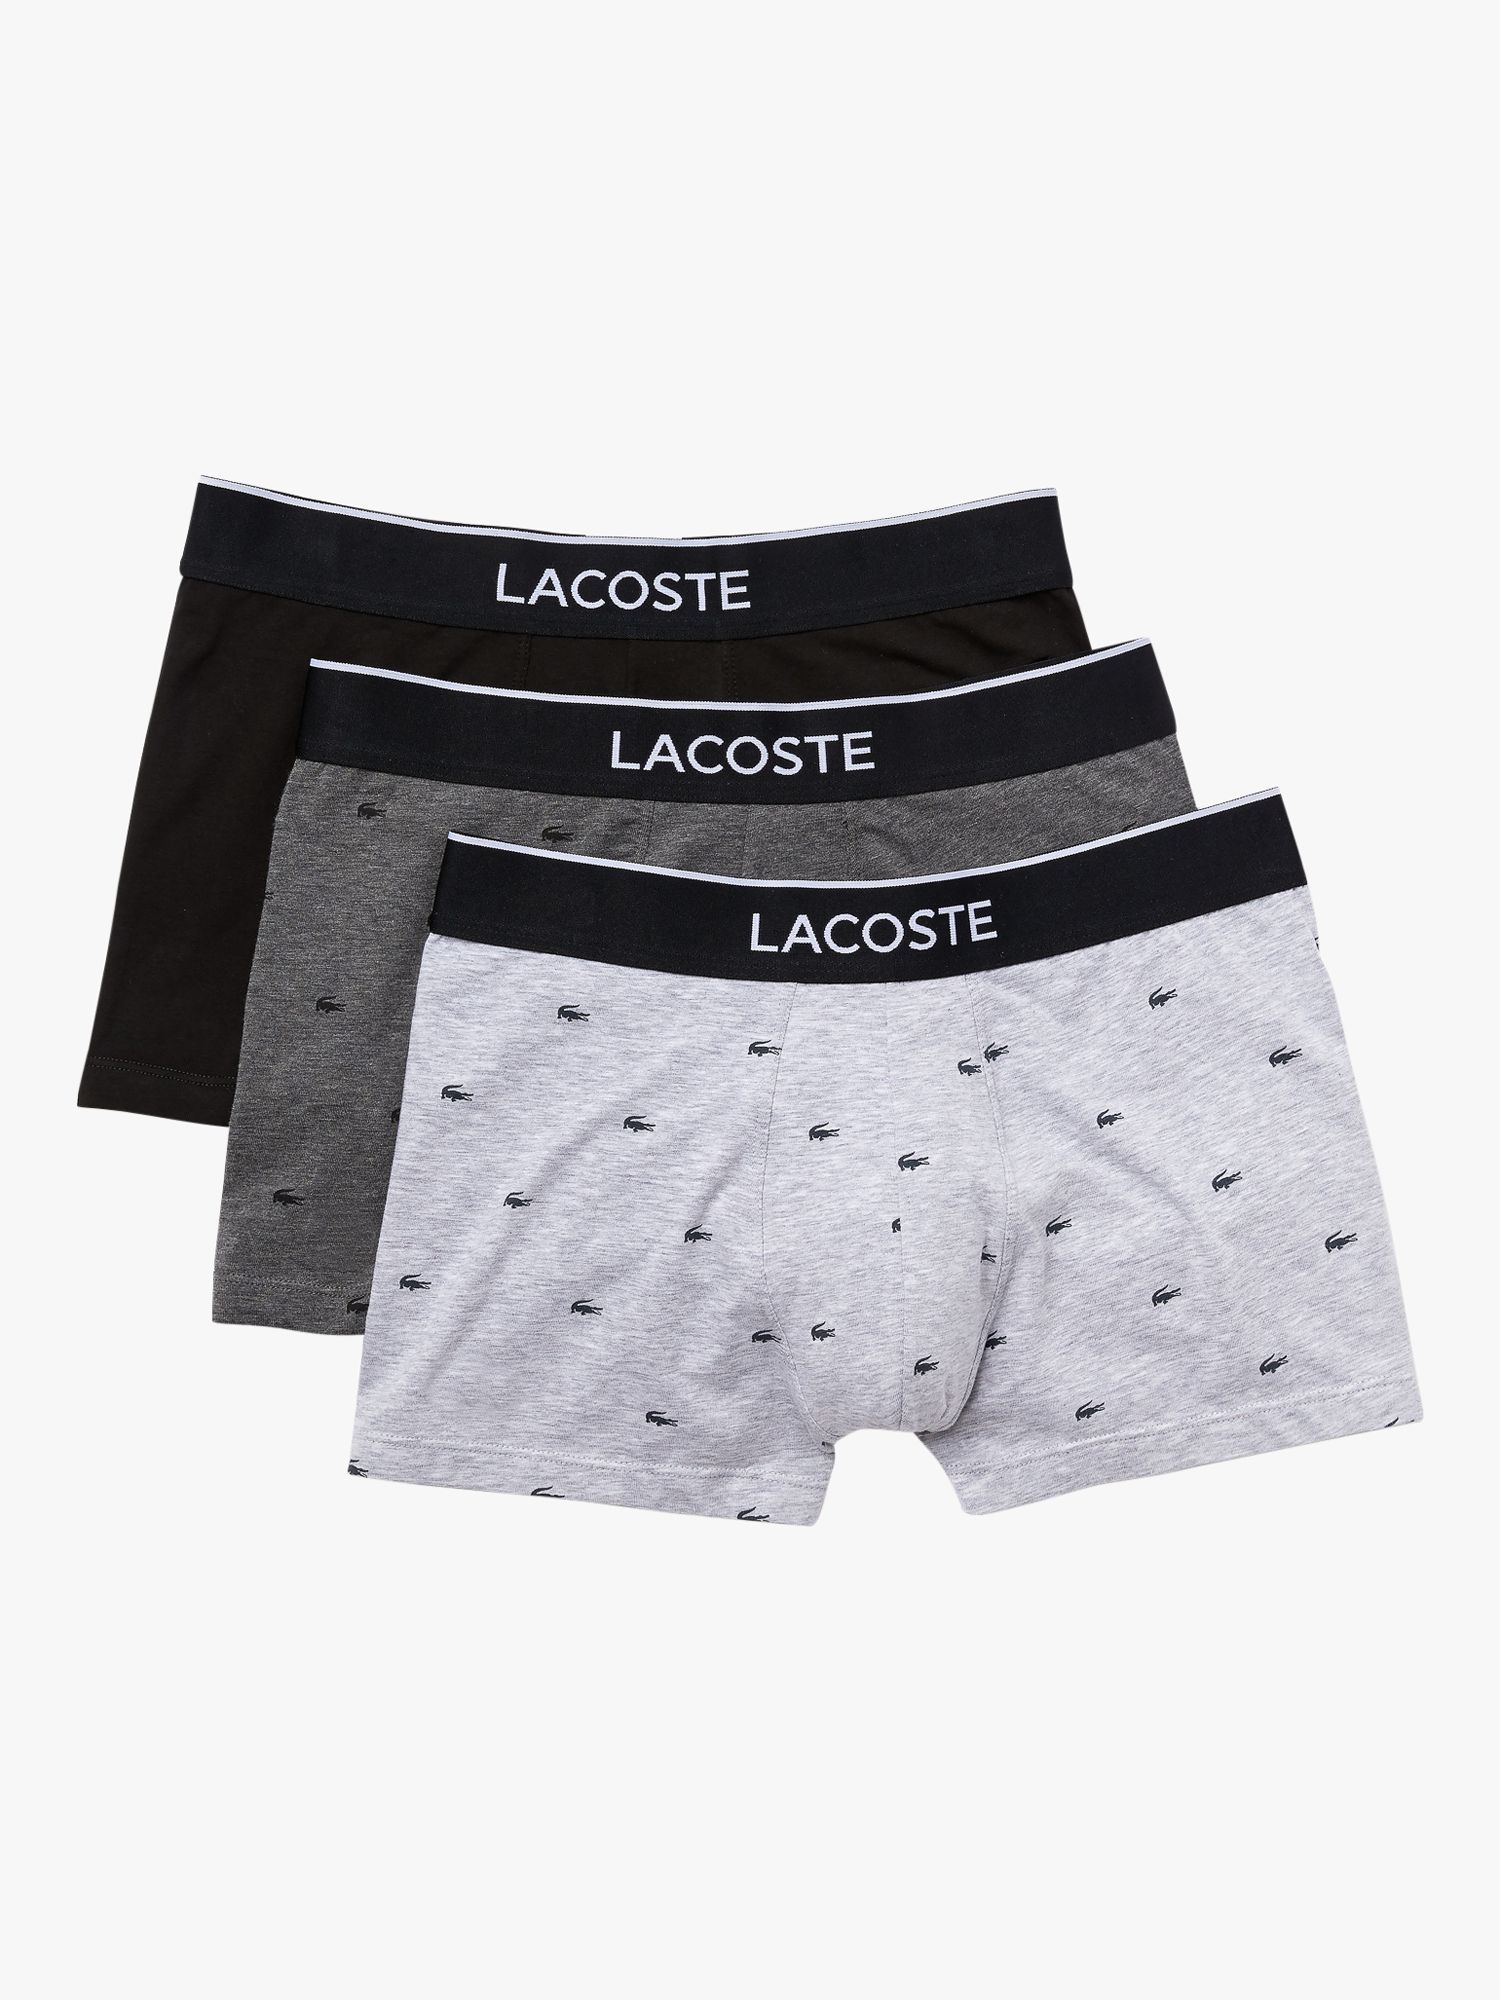 Lacoste Men's 3-Pack Performance Boxer Shorts